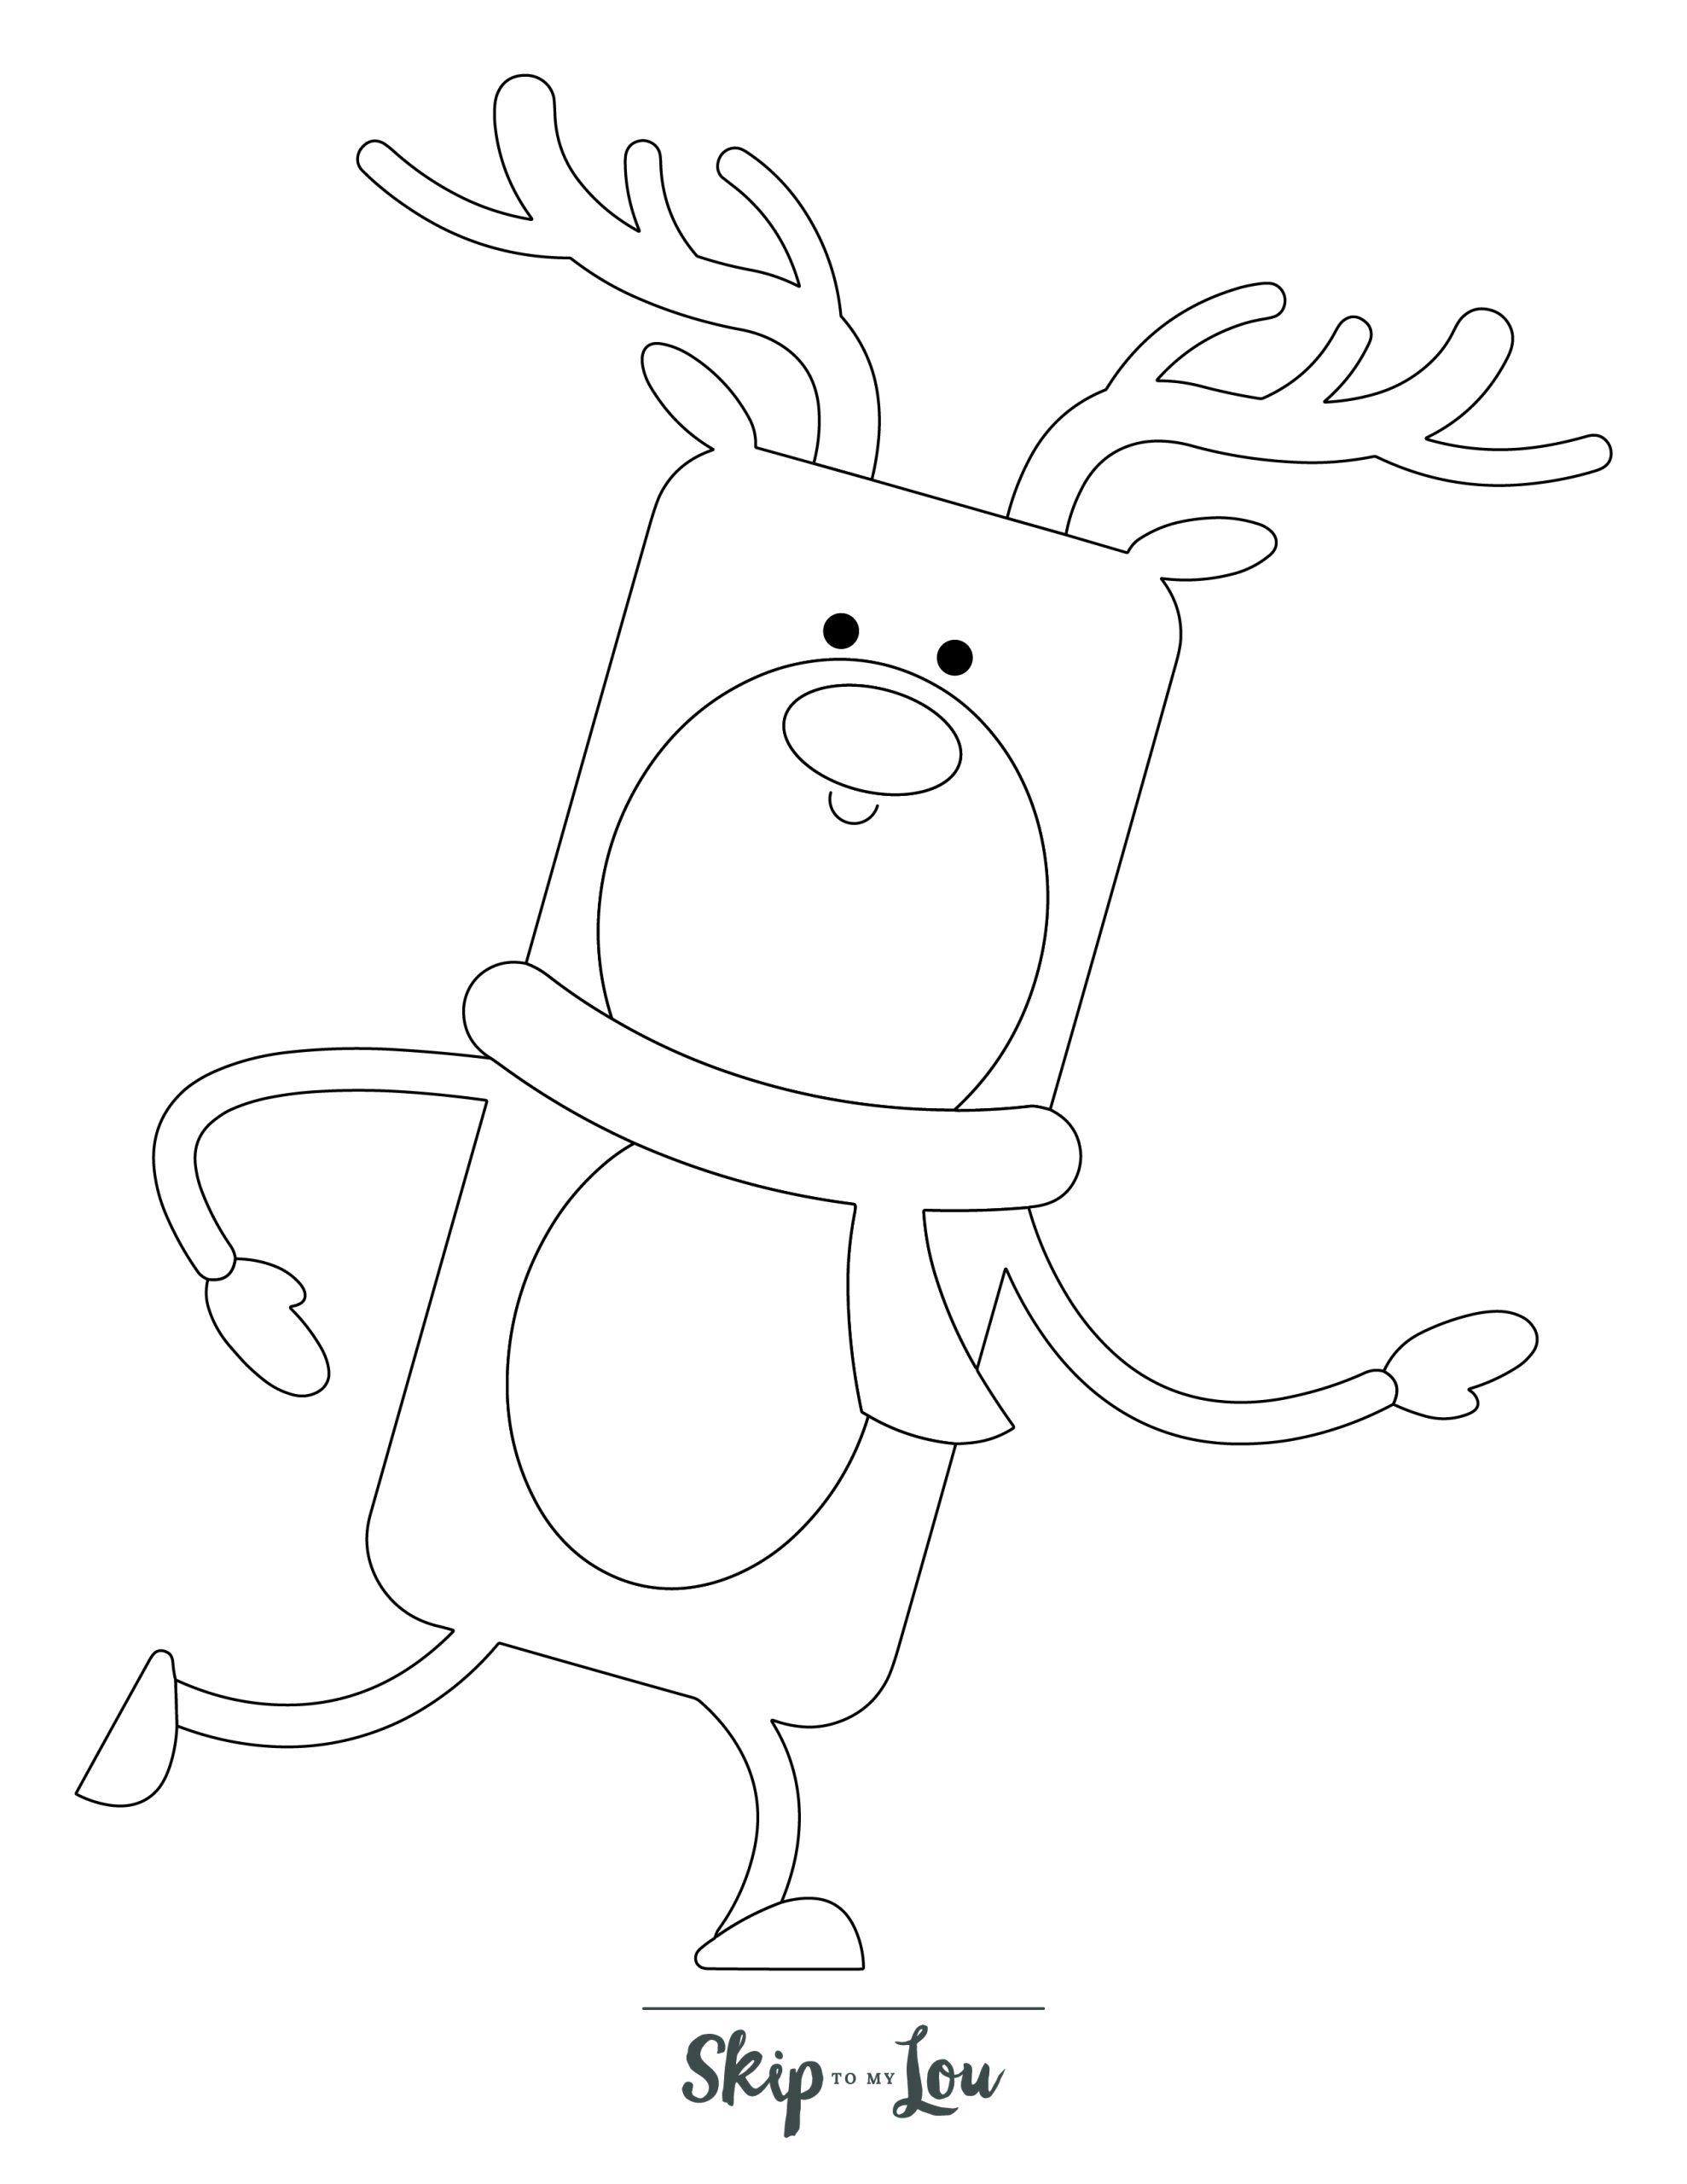 Reindeer Coloring Page 11 - Line drawing of jolly reindeer standing up